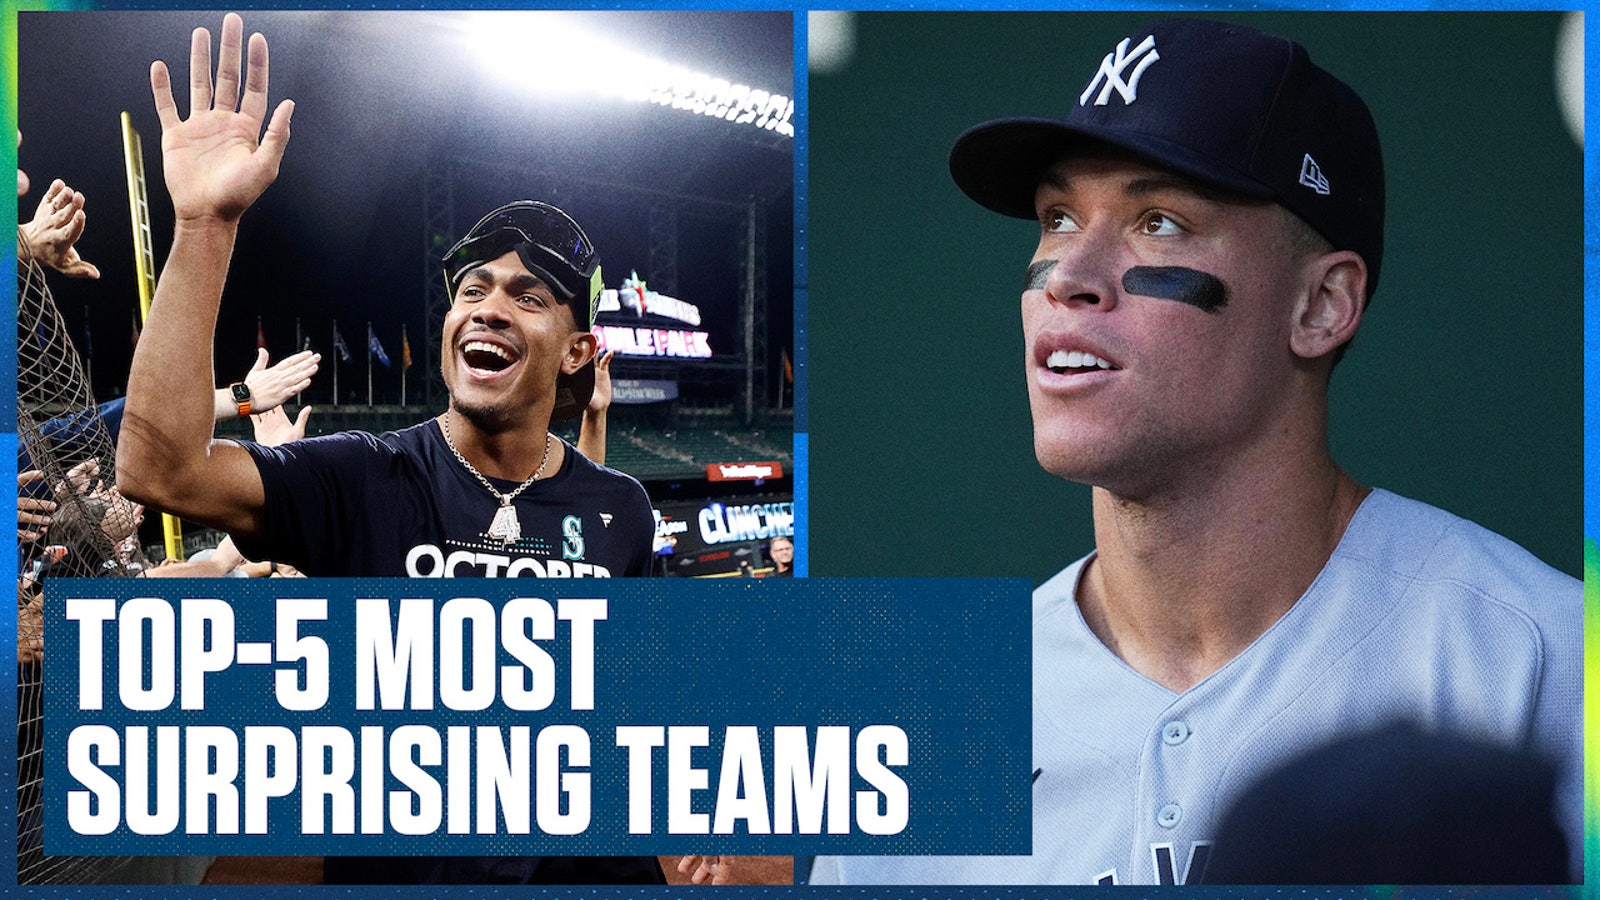 Mariners and Yankees headline most surprising teams of the season